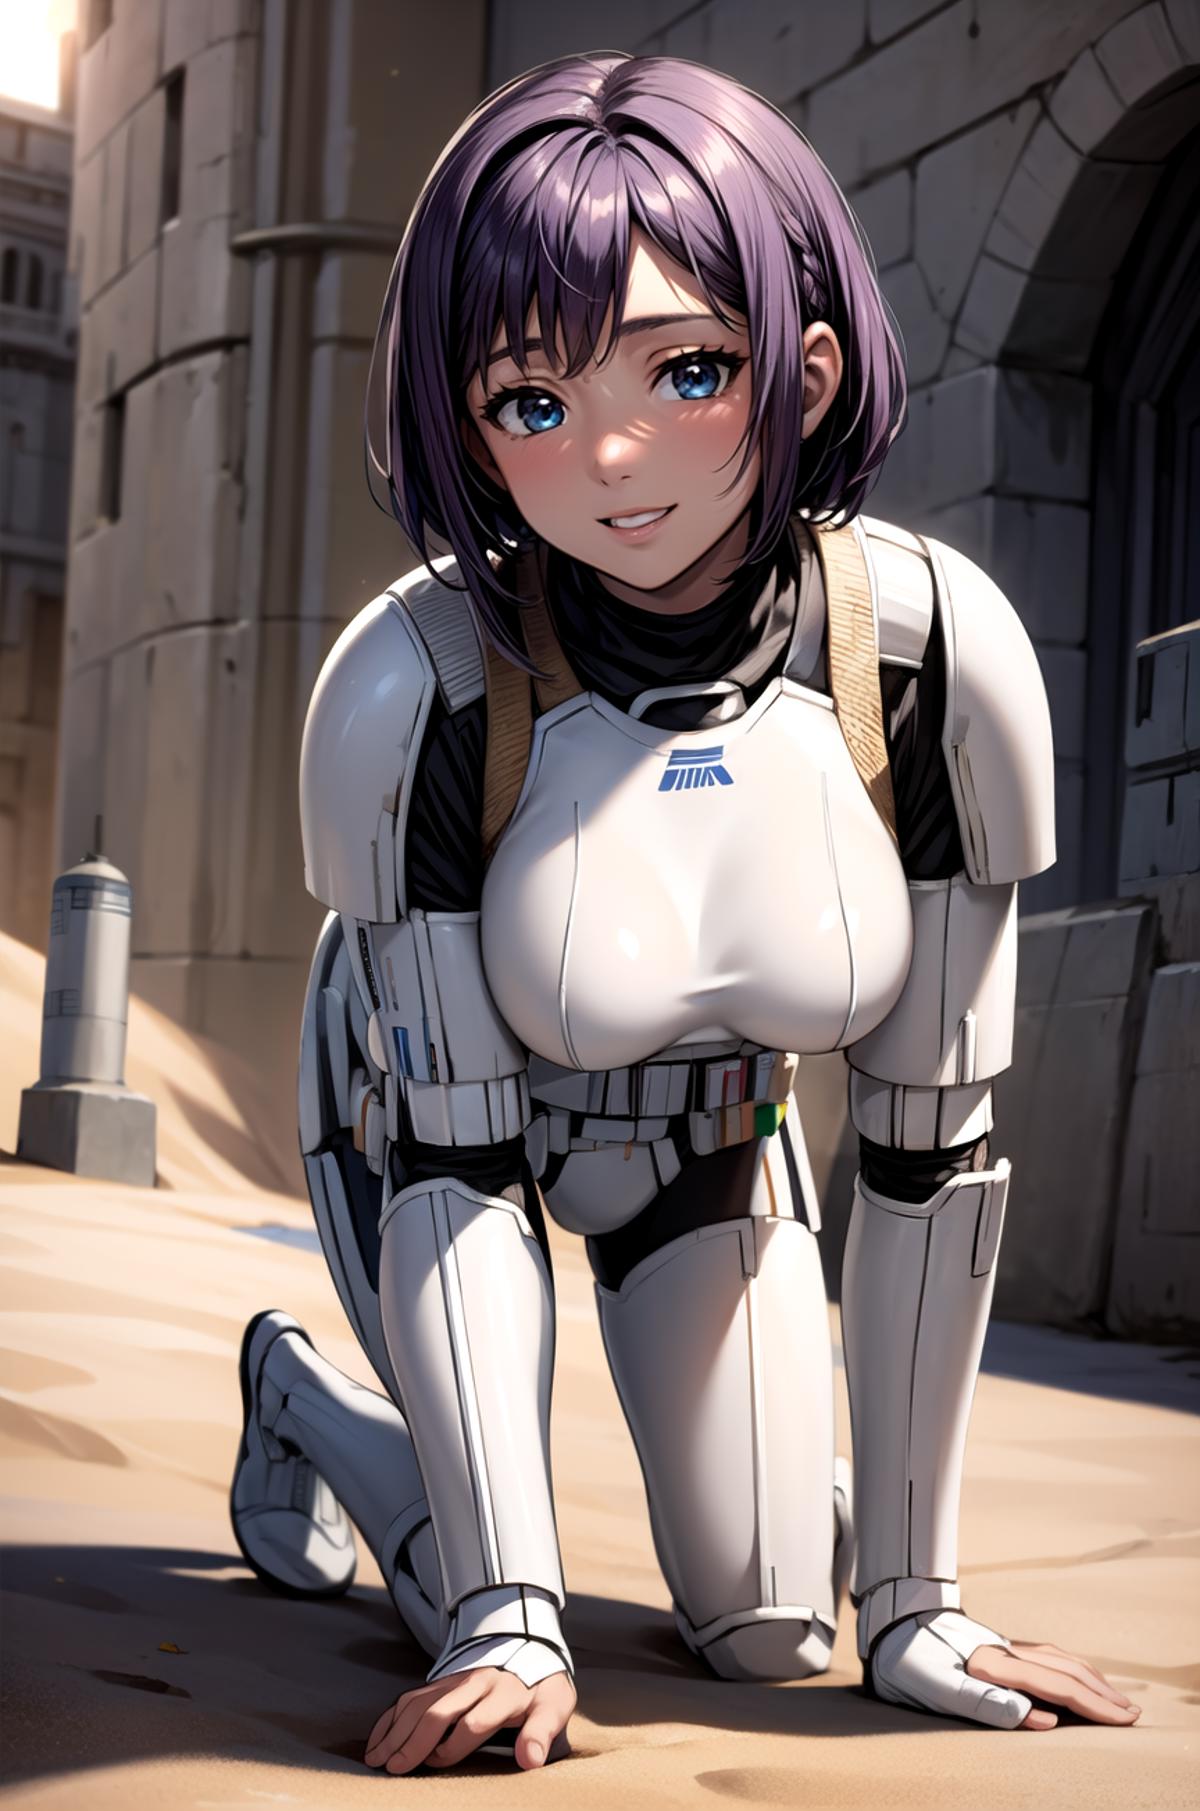 Stormtrooper Armor | Star Wars image by Deto15